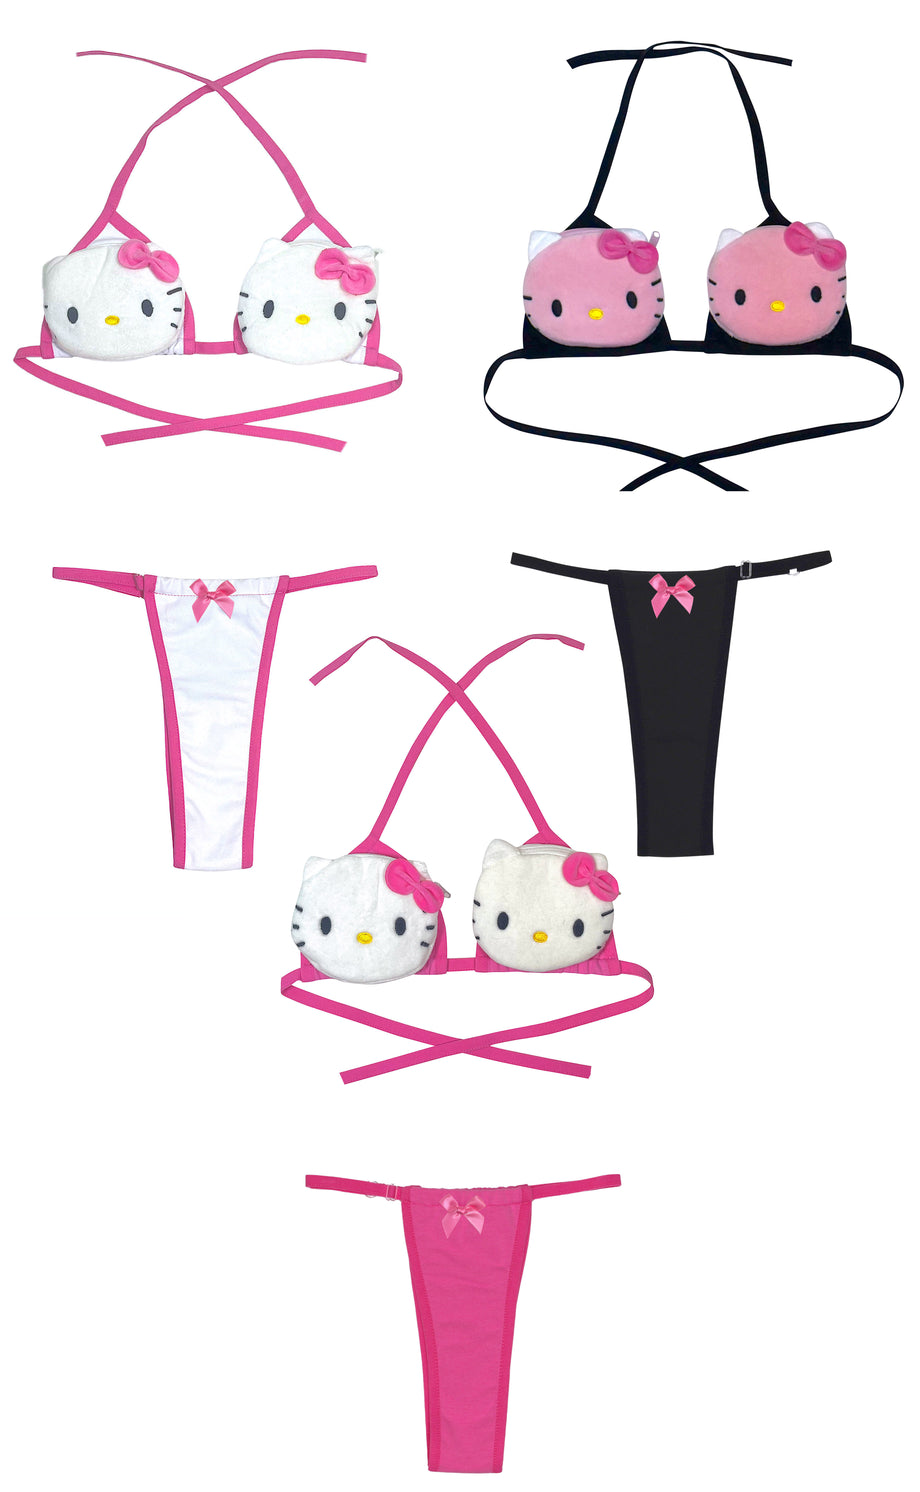 Bikini, Text-Marke (keine Lizenz), Hello Kitty (Art. 1112034_1)